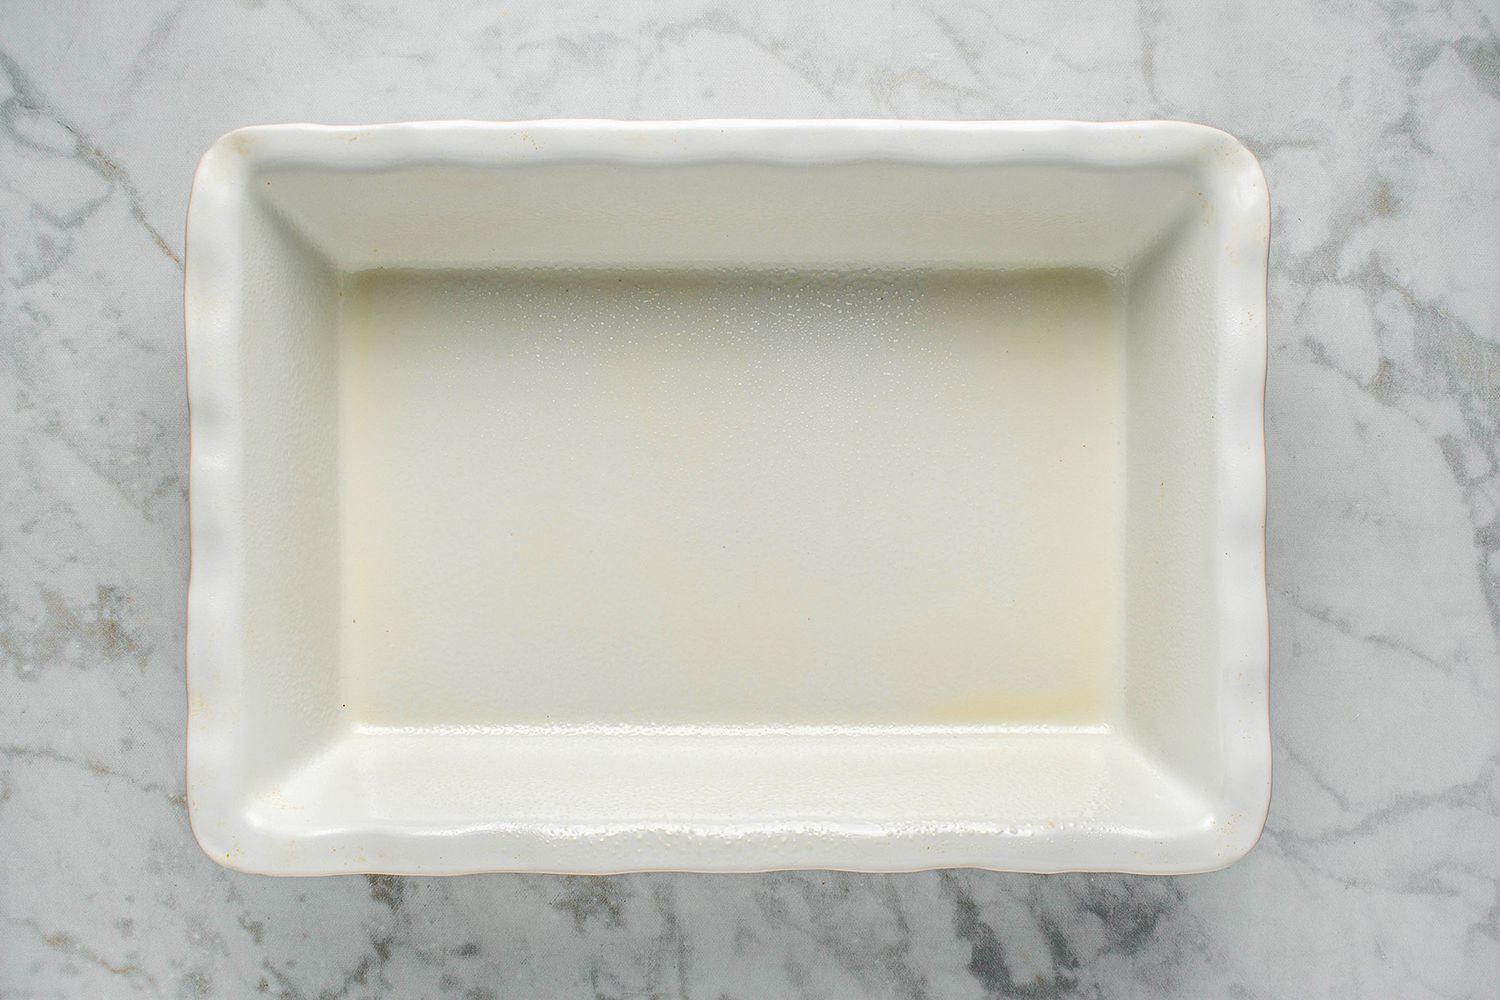 Well-greased white rectangular baking dish 